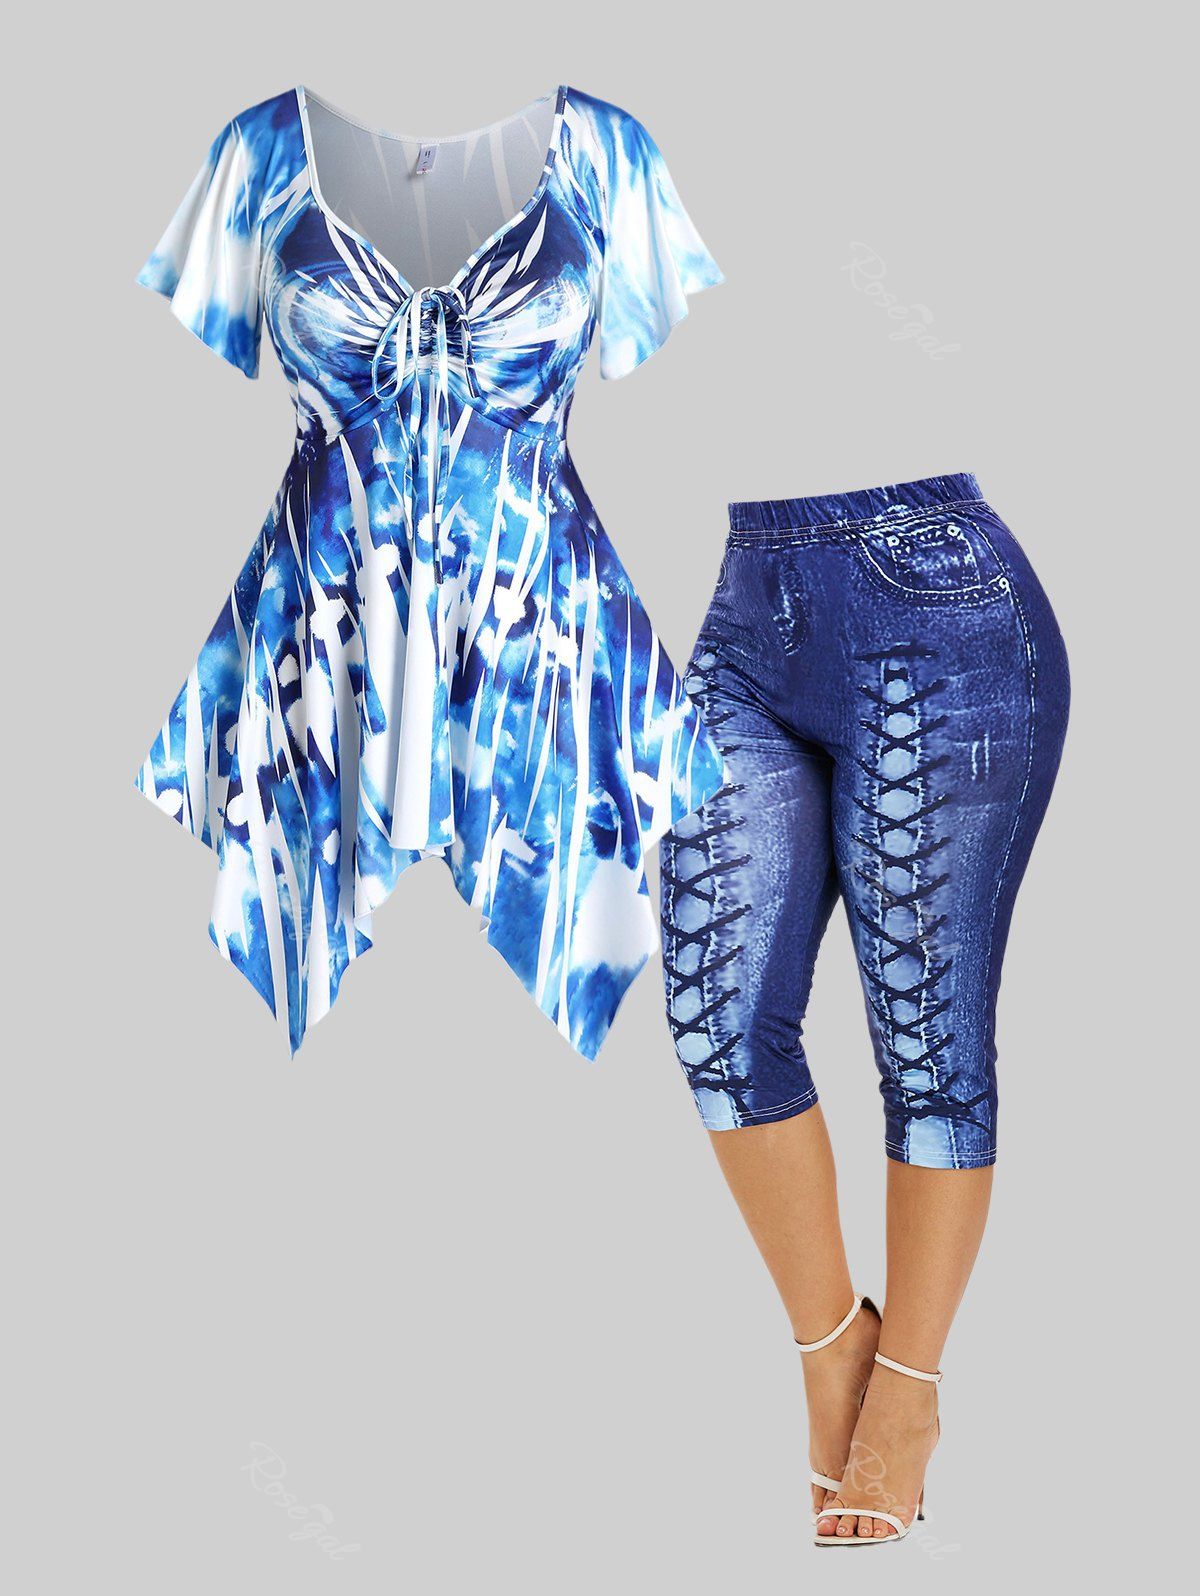 Sale Tie Dye Cinched Handkerchief Tank Top and 3D Lace Up Jean Print Capri Leggings Plus Size Summer Outfit  